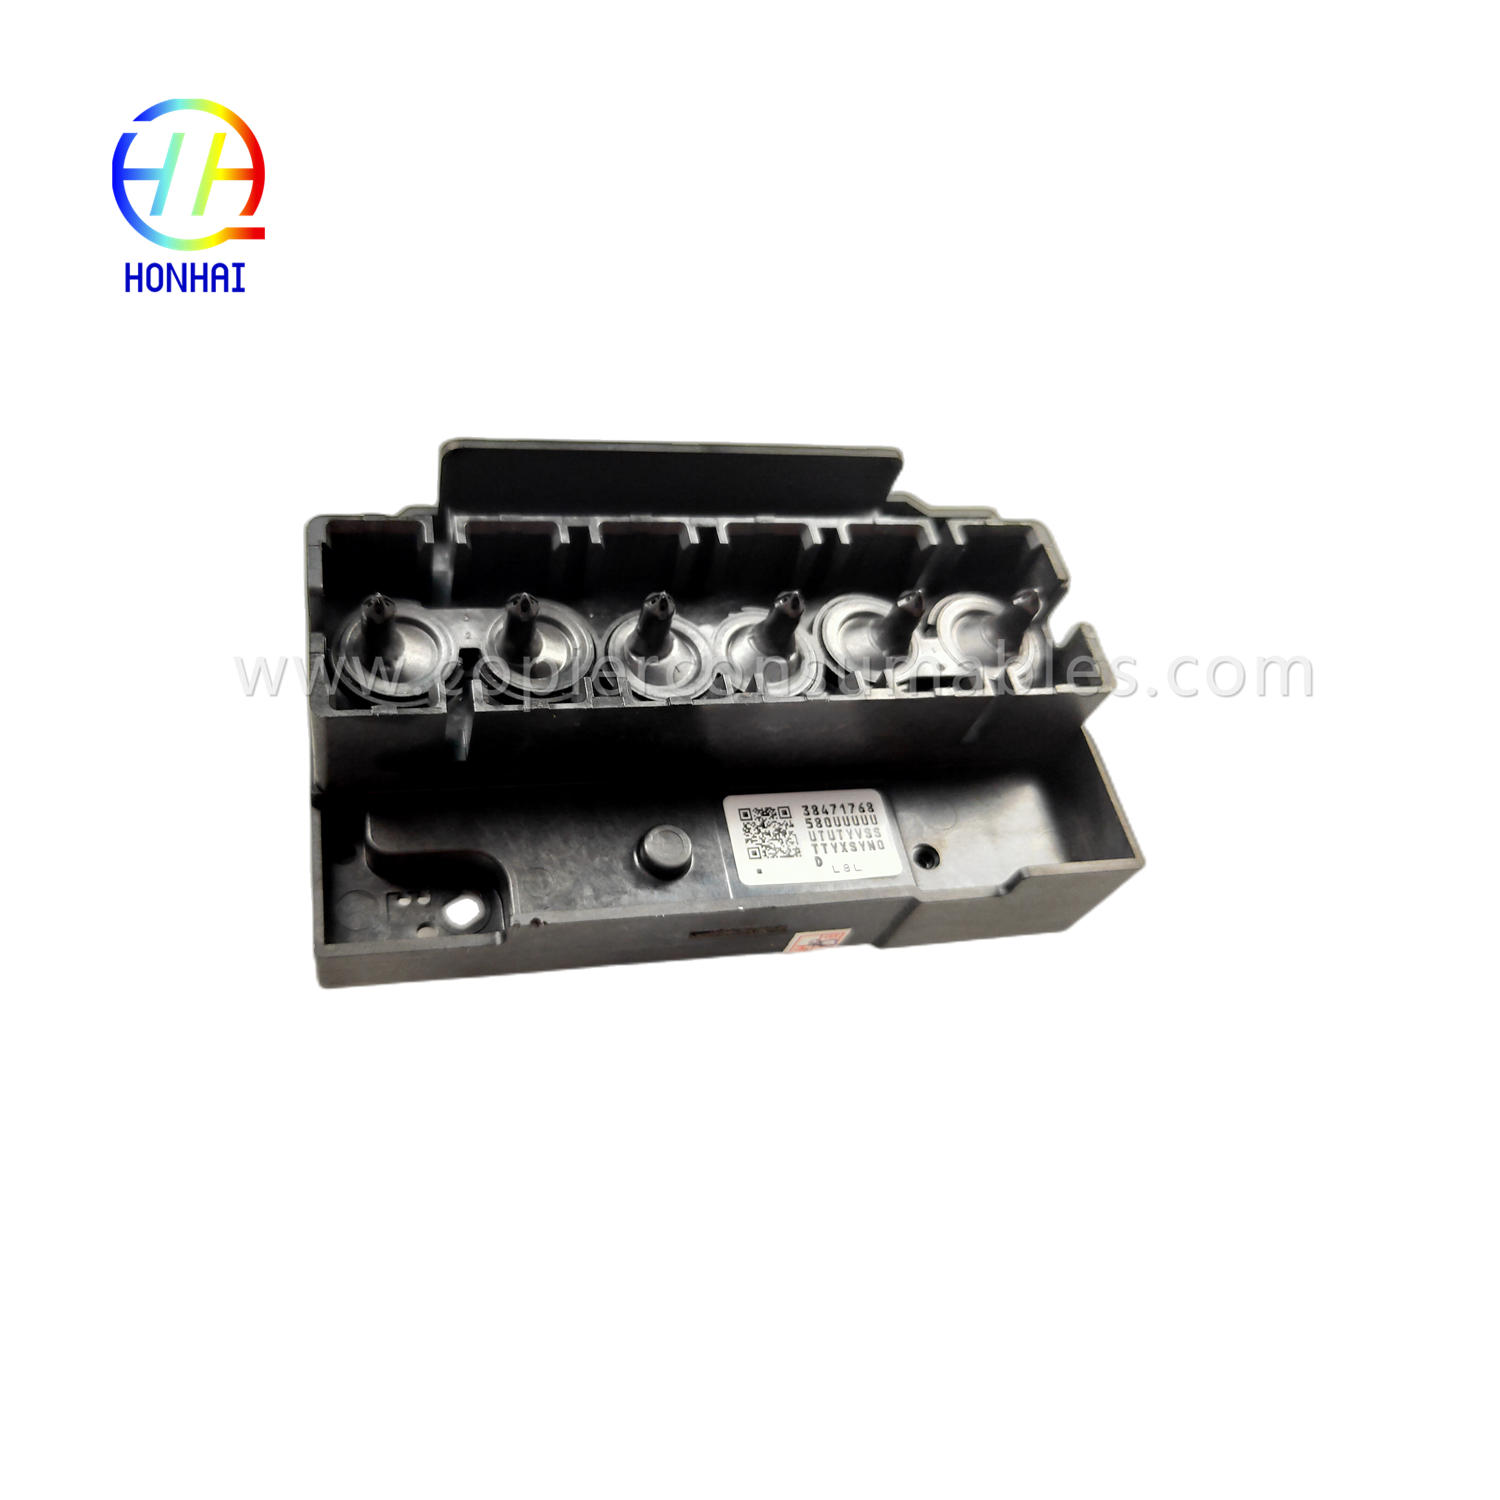 Cabezal de impresión para Epson L801 L805 L800 L850